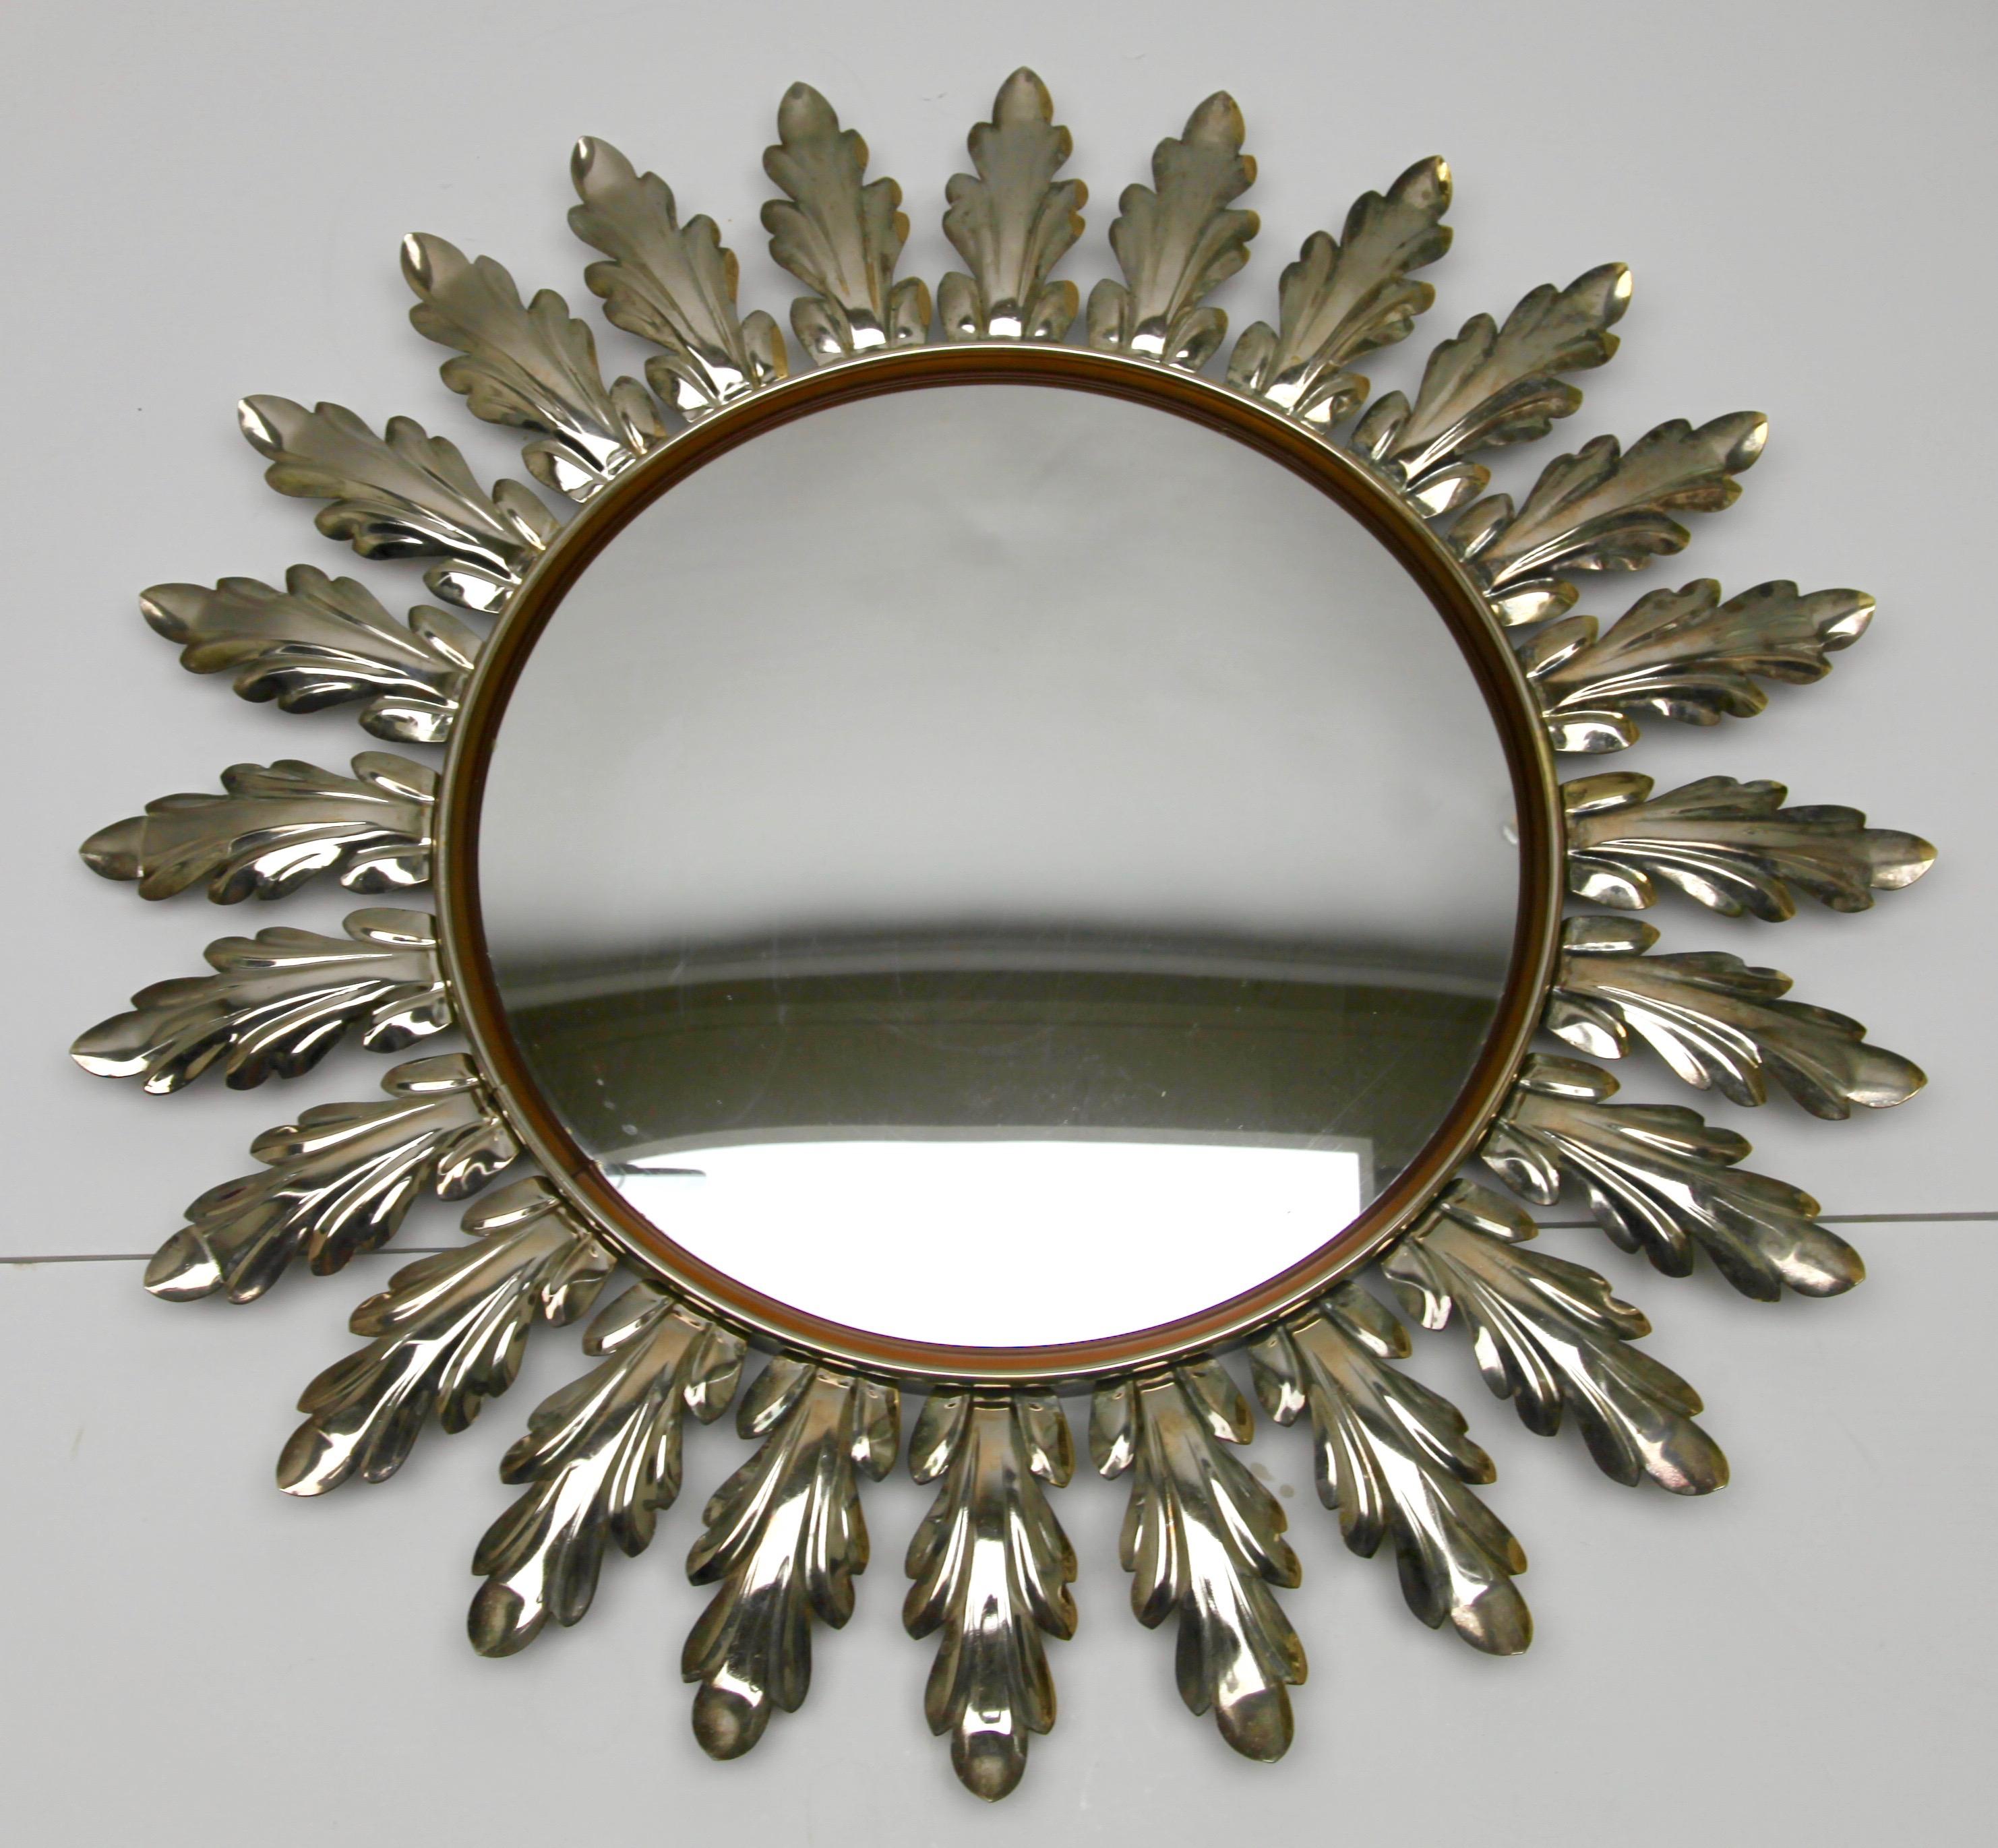 Belgian Sunburst Mirror with Convex Mirror Made by Factory Deknudt in Belgium, 1950s